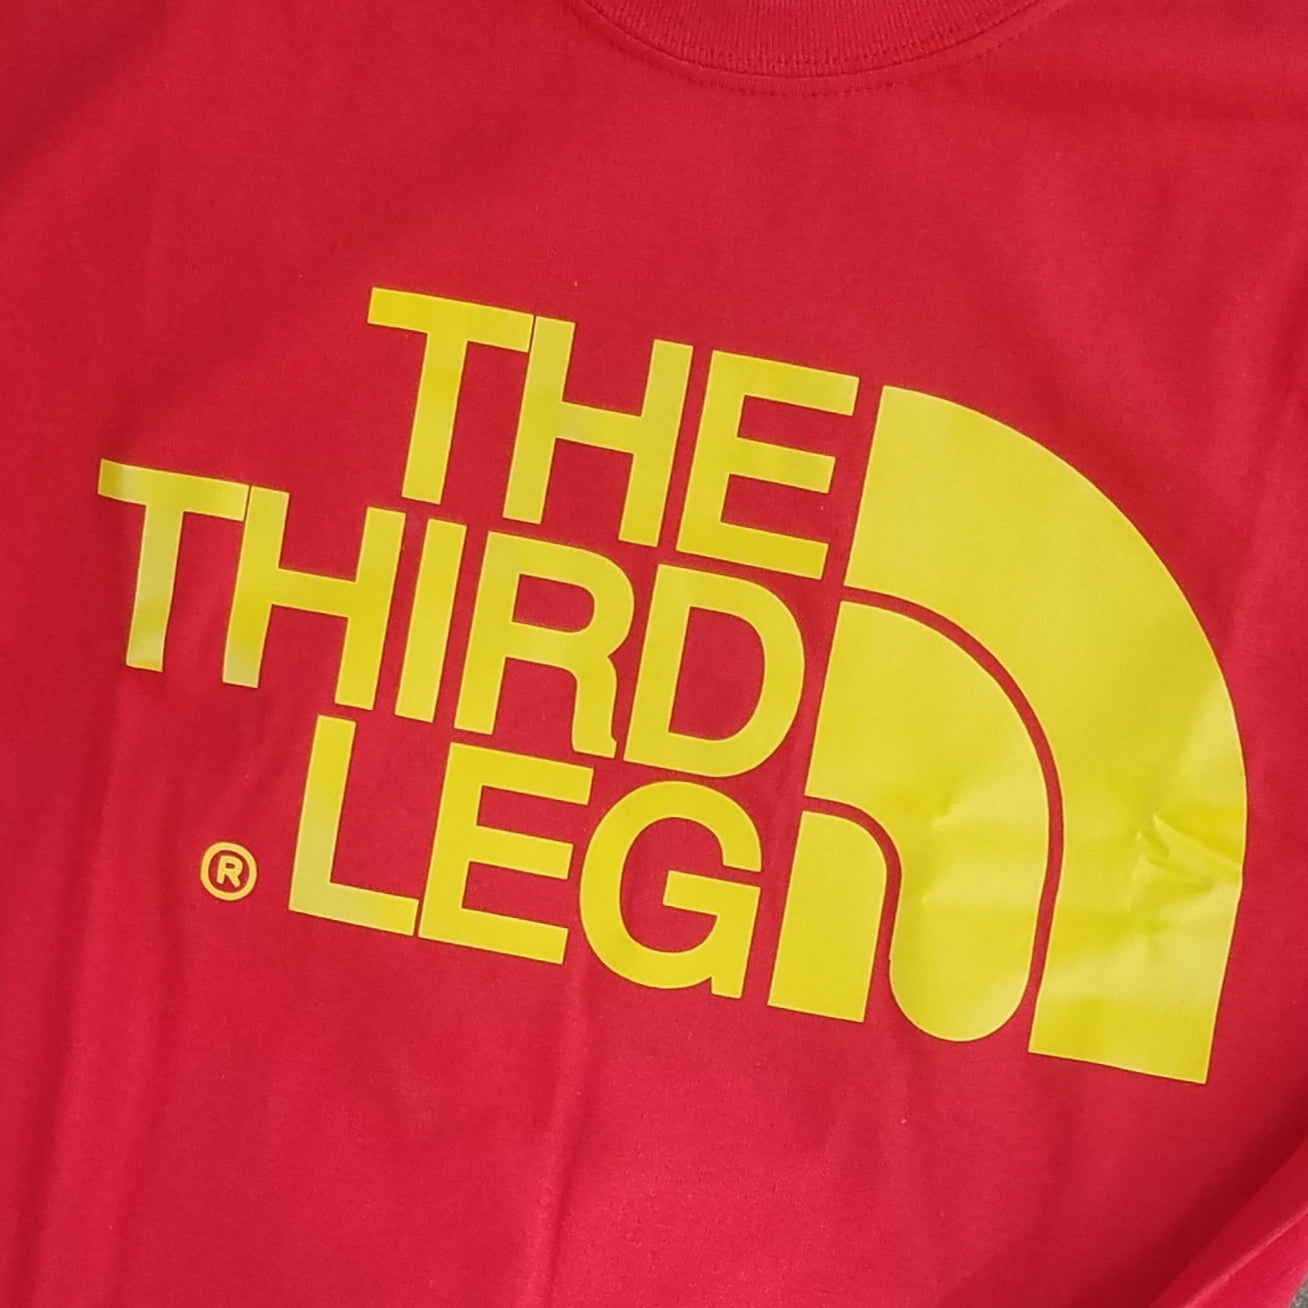 The Third Leg Logo T-shirt